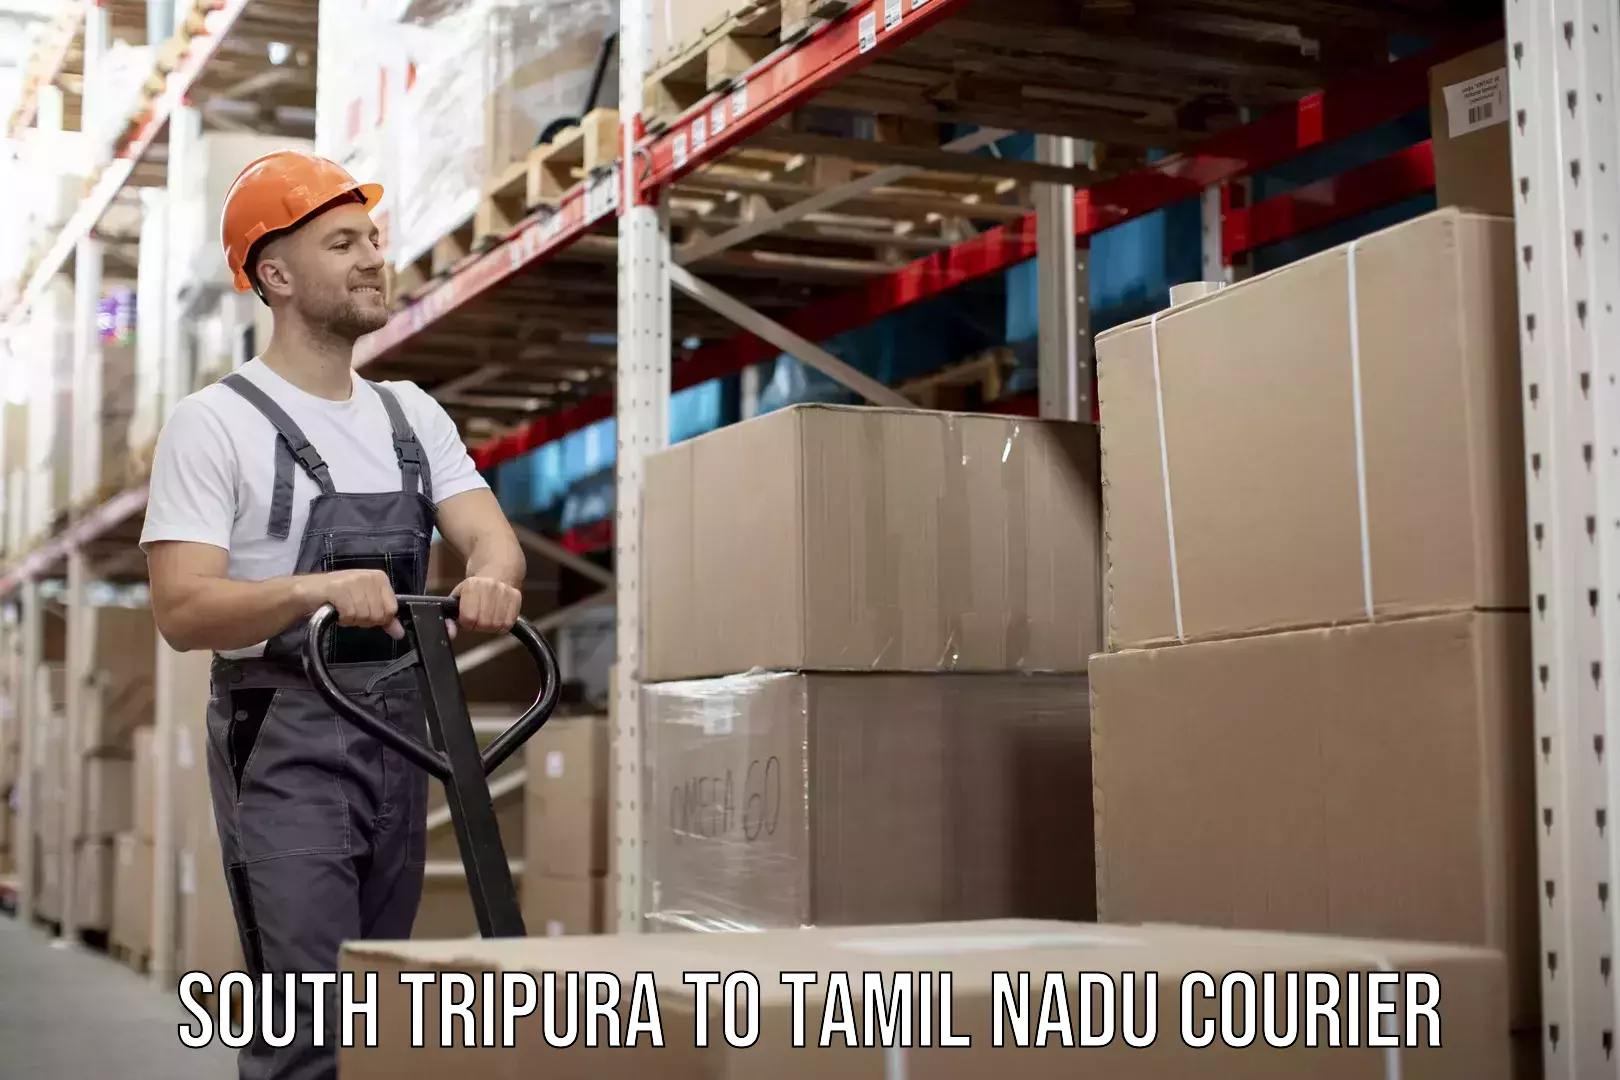 Courier membership South Tripura to Tamil Nadu